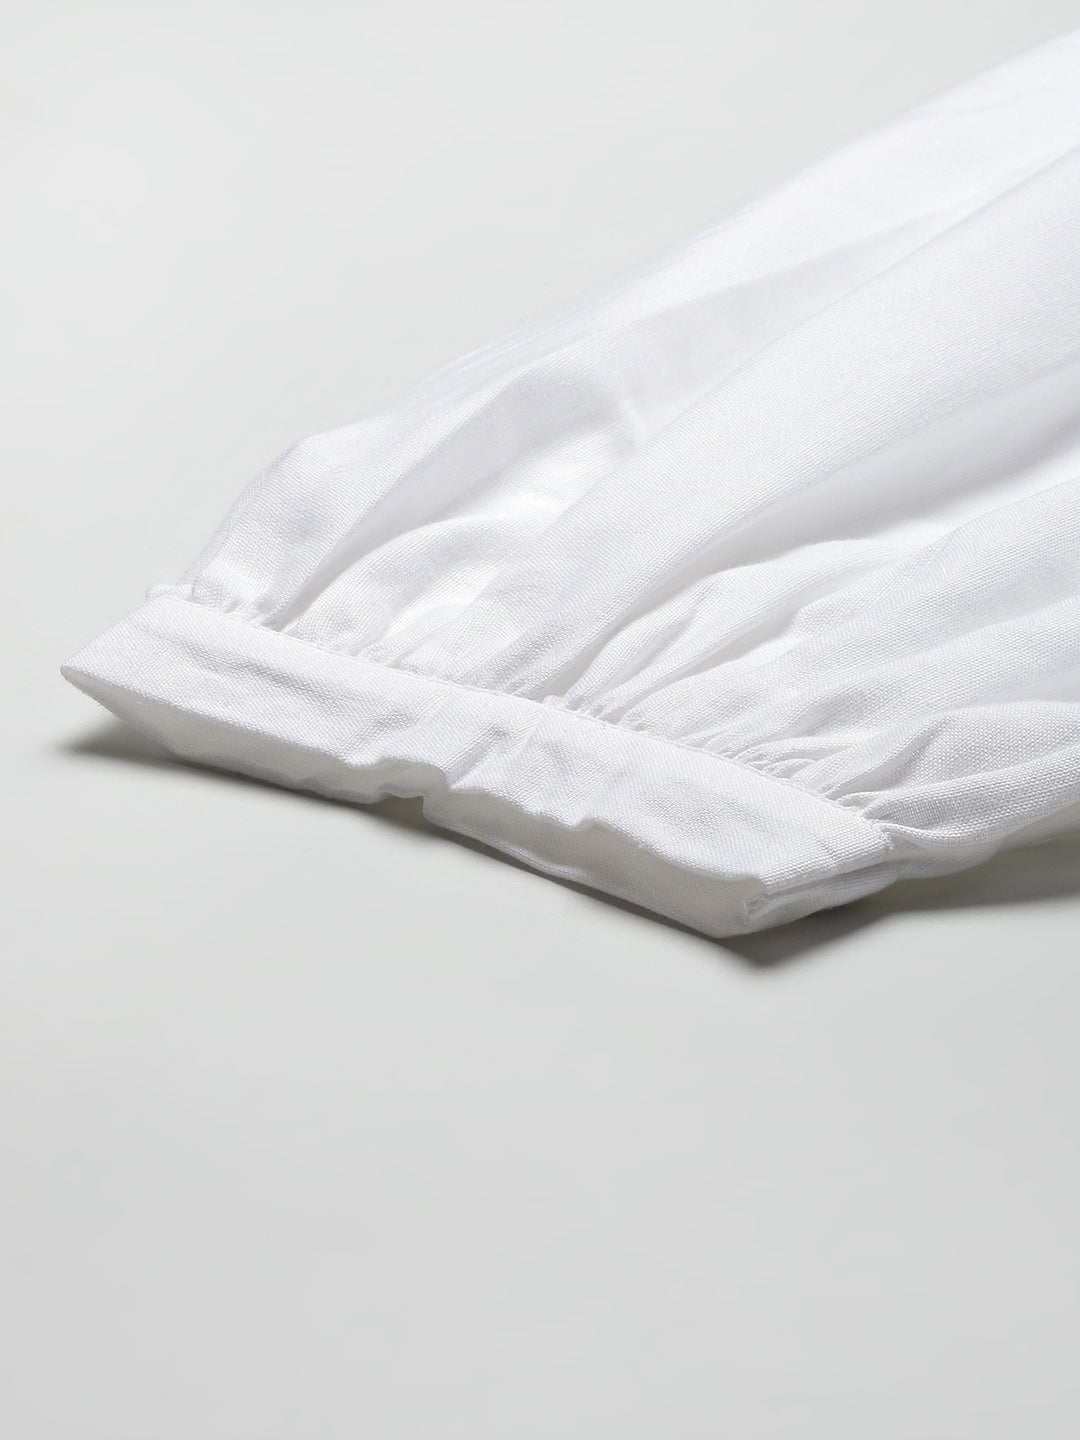 Women's  White Cotton Flex Solid Stylized Dhoti Pant - Juniper